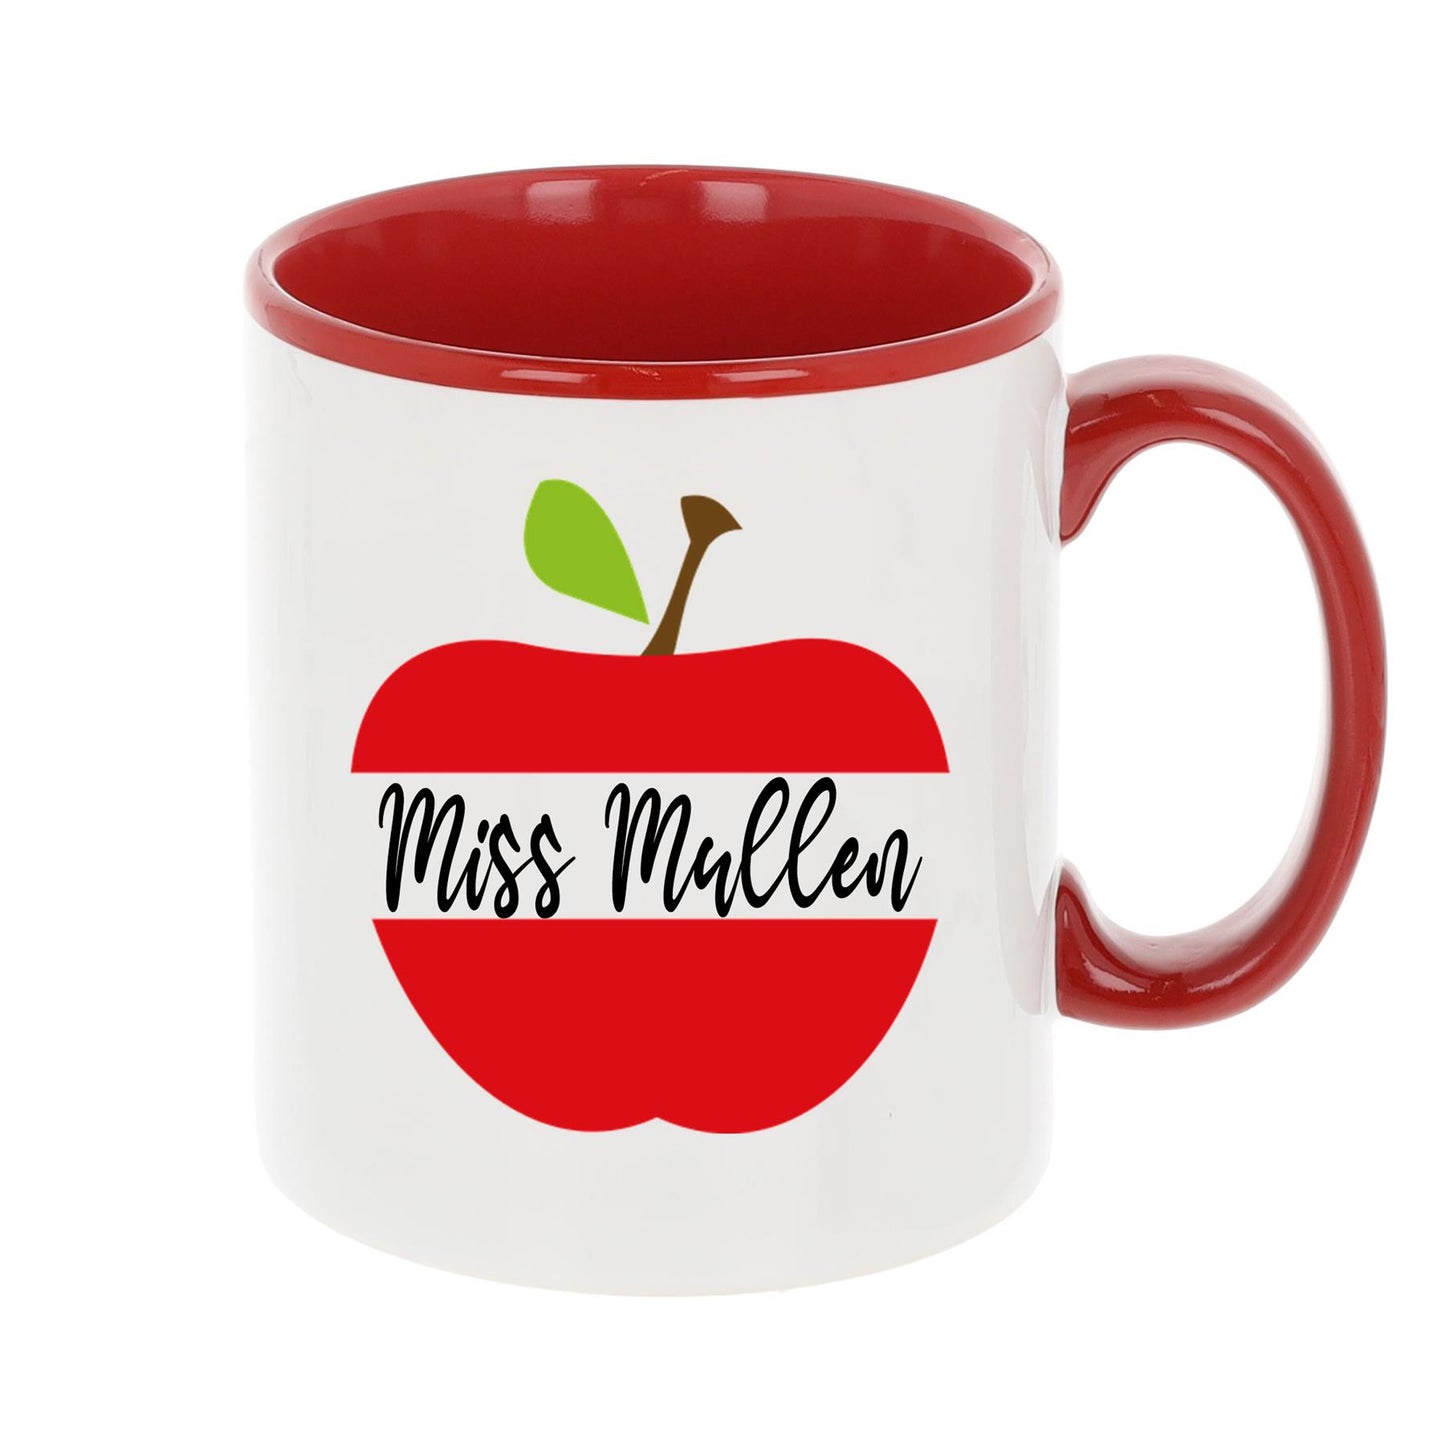 Personalised Teacher Thank you Gift Filled Mug & Coaster Set Red  - Always Looking Good - Empty Mug  